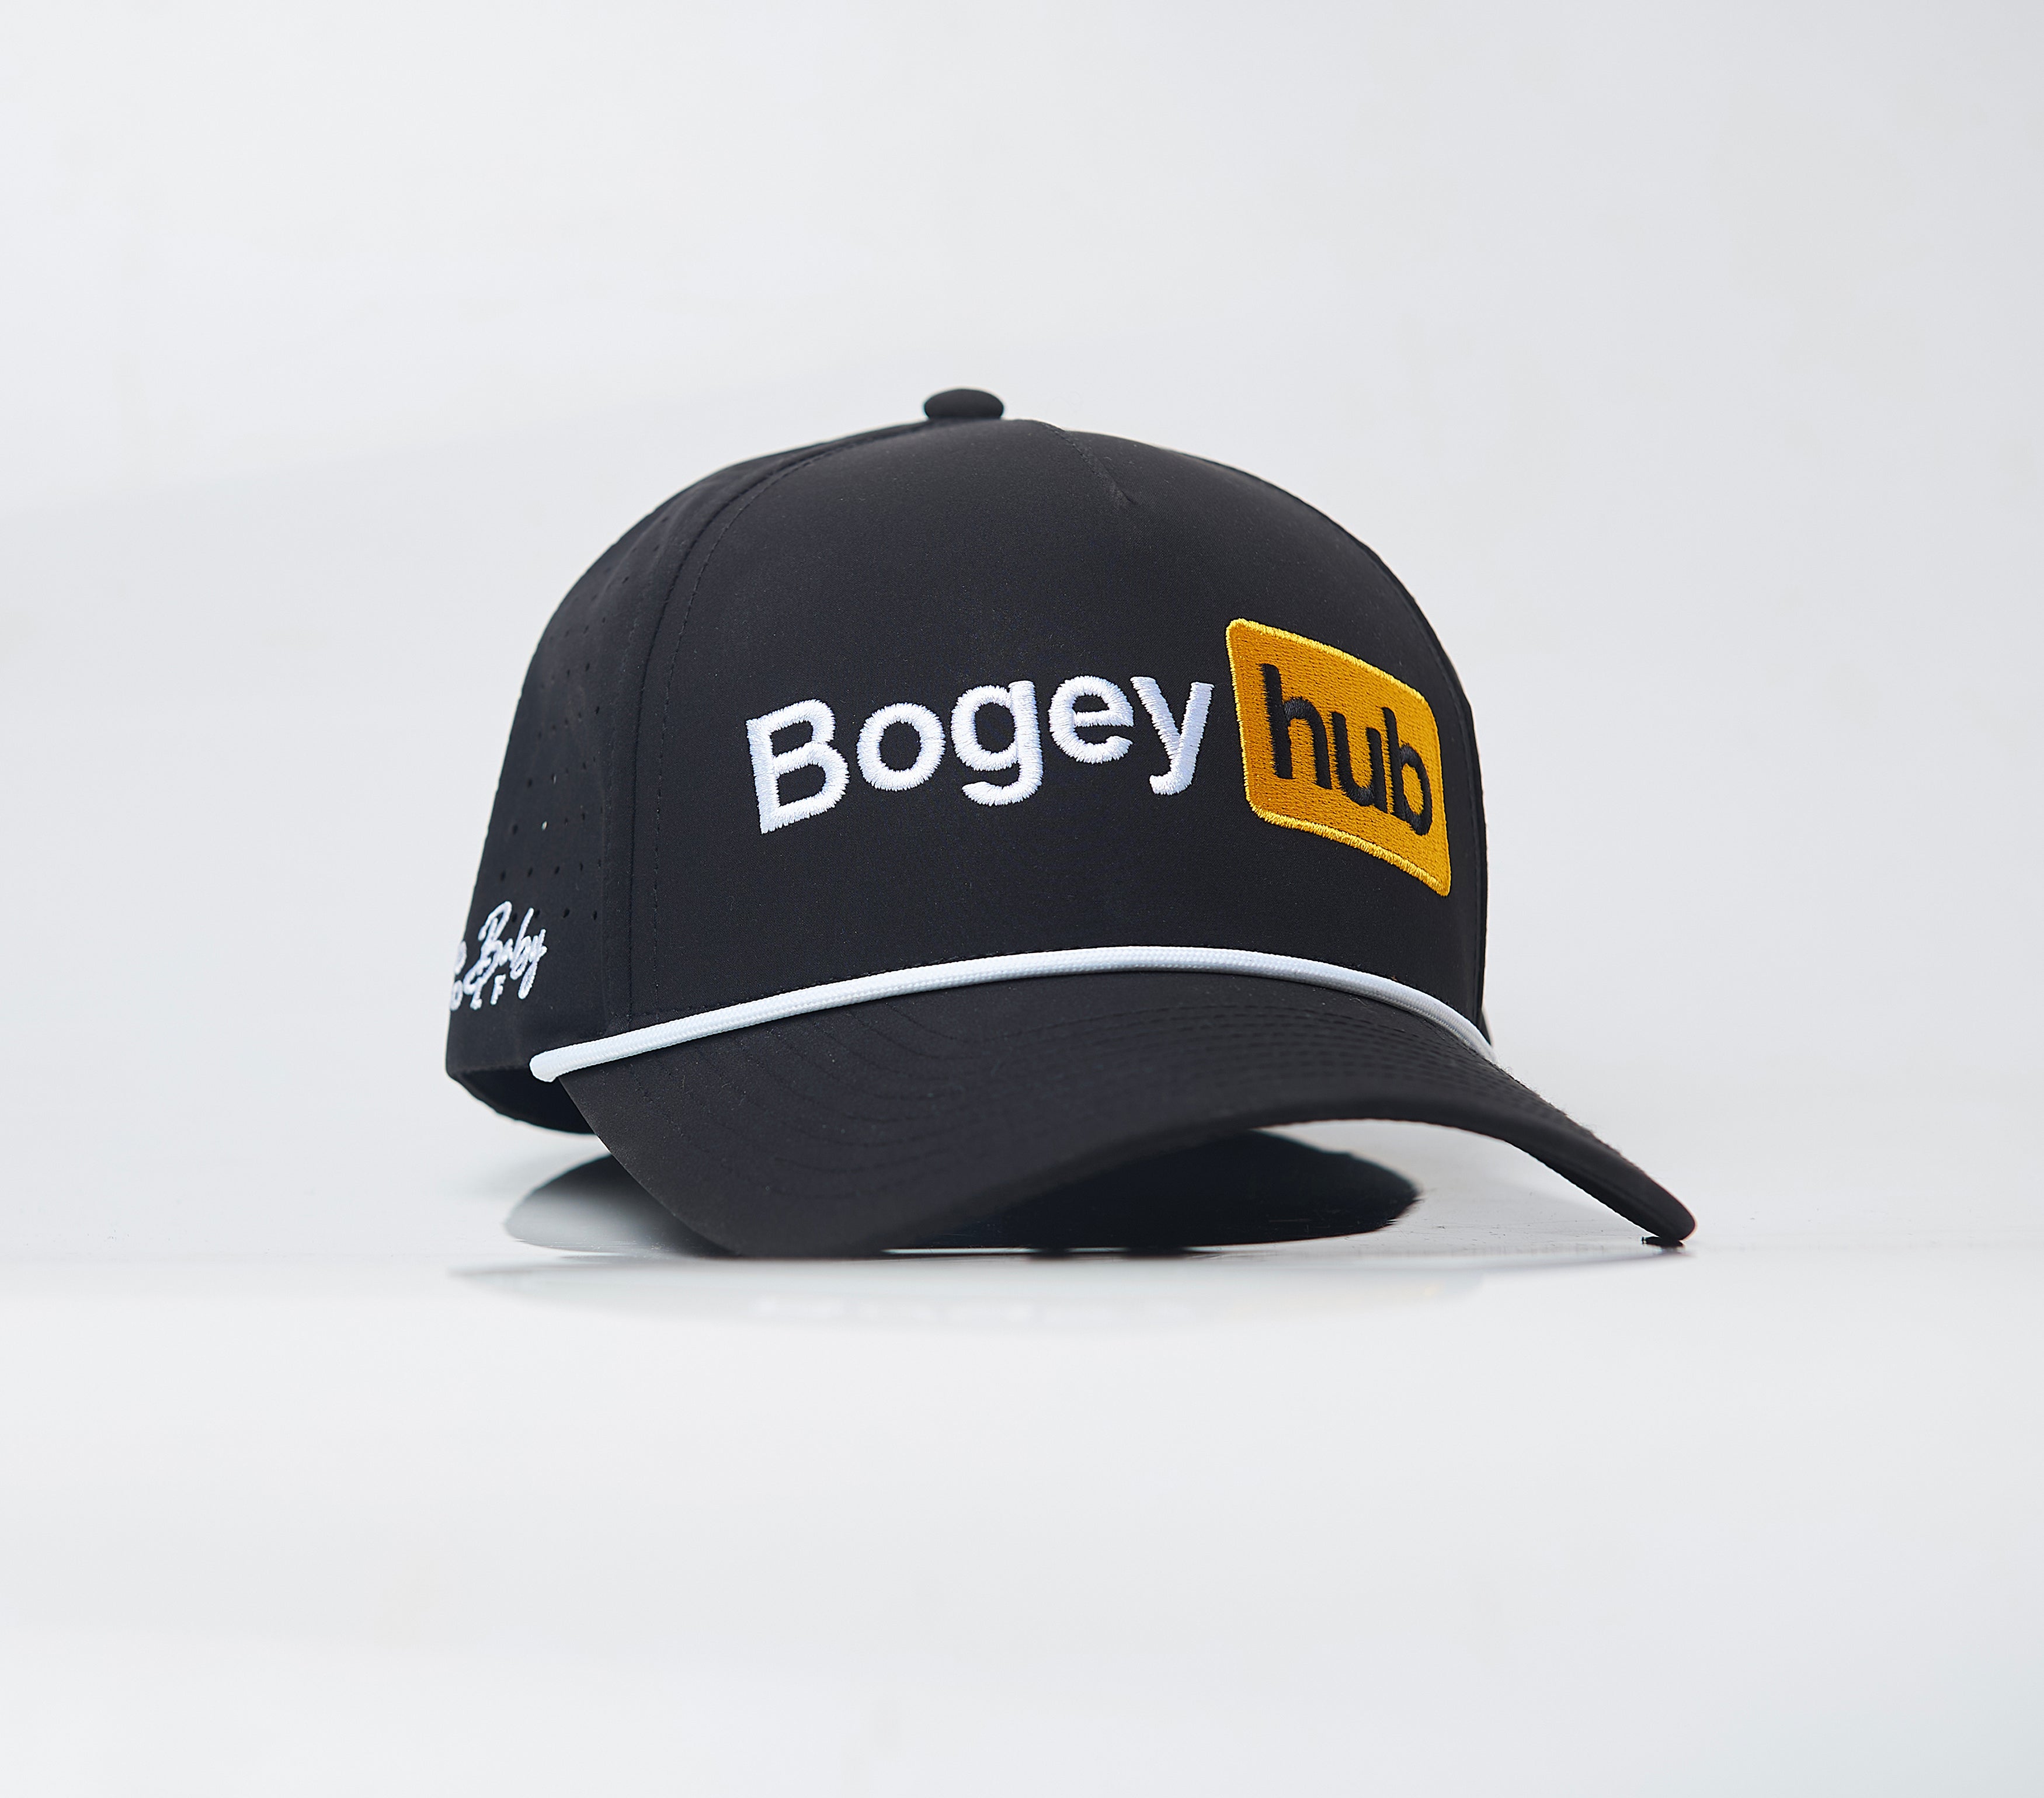 Bogey Hub. Performance Golf Hat. Snapback